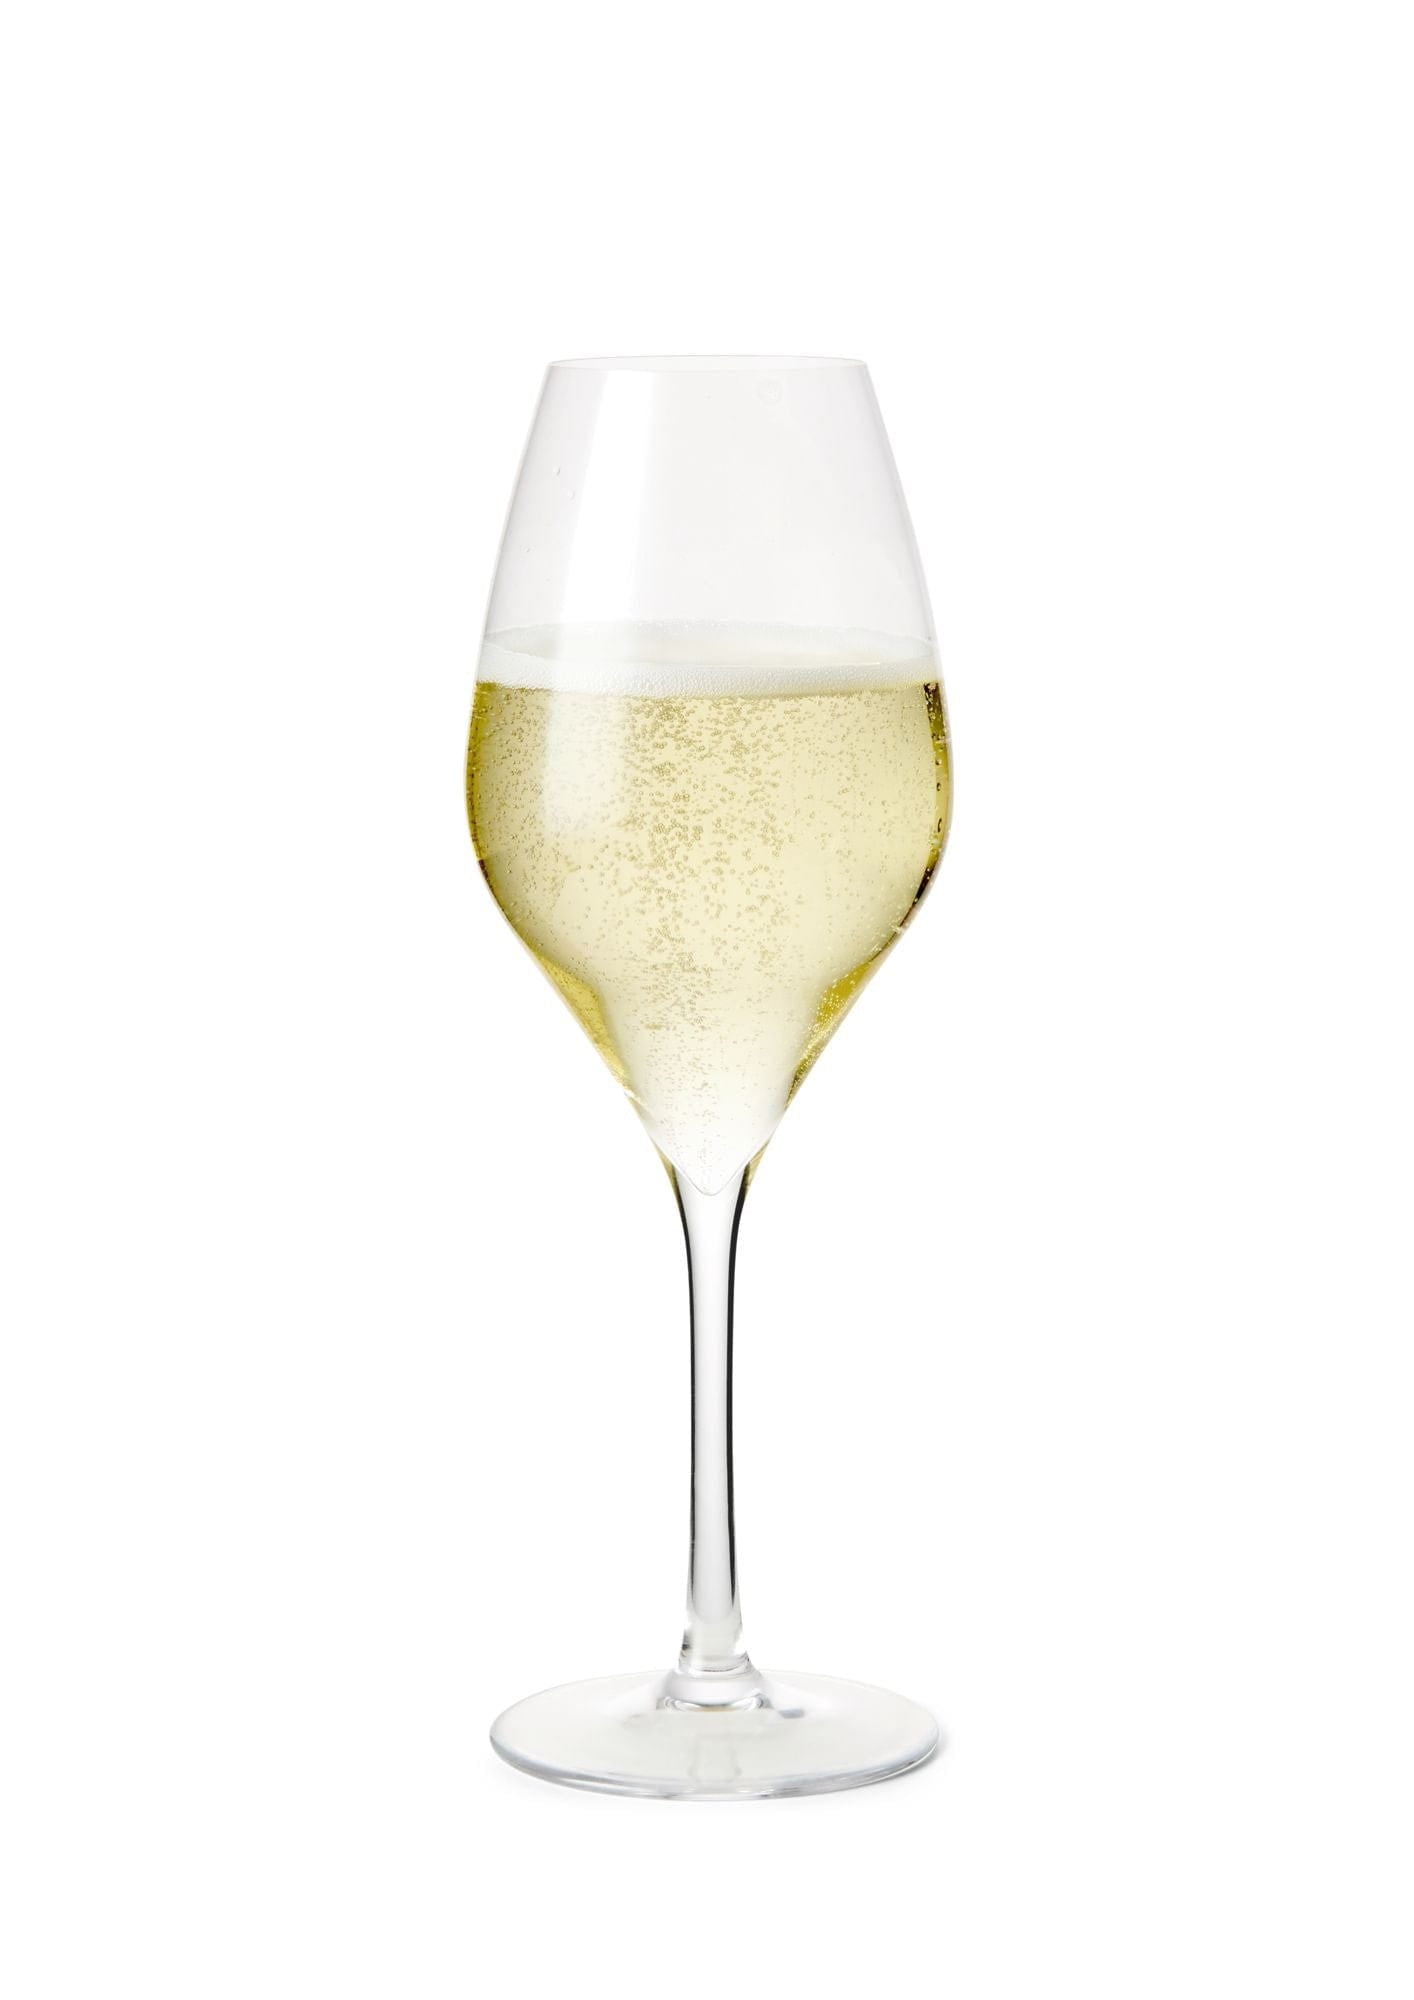 Rosendahl Premium Champagnerglas Set von 2 370 ml, klar